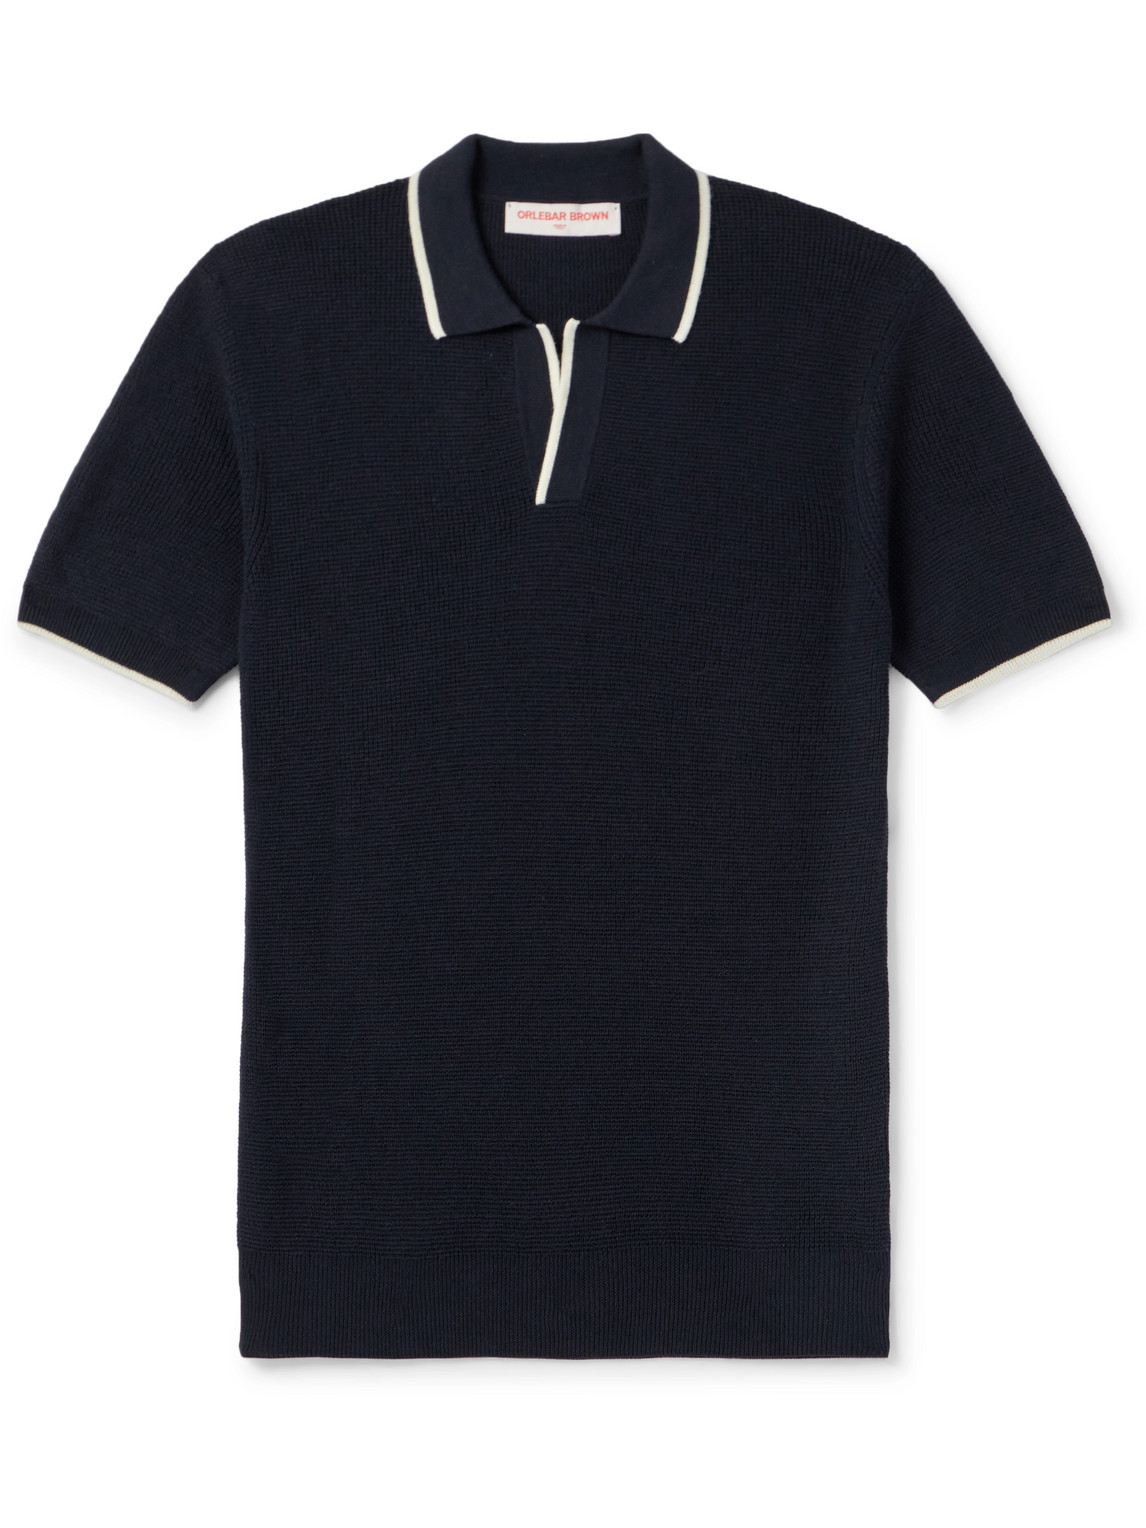 Horton Merino Wool Polo Shirt